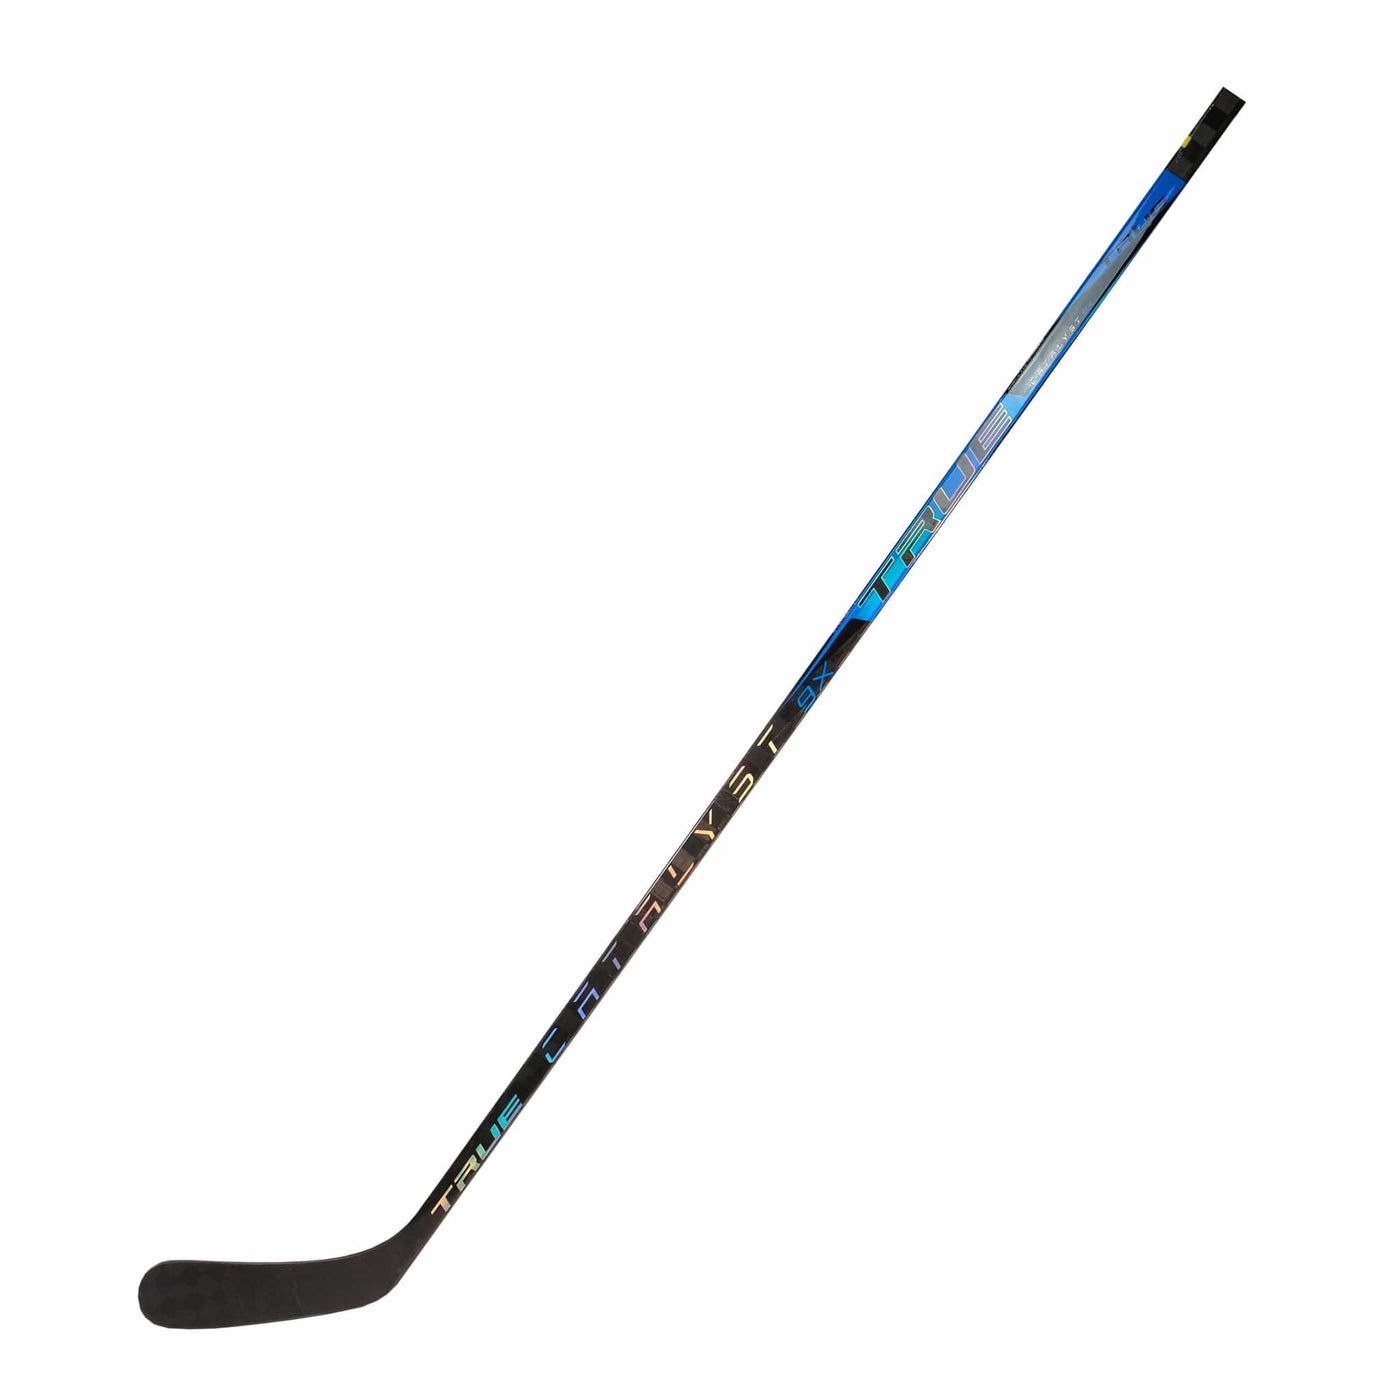 TRUE Catalyst 9X Pro Stock Senior Hockey Stick - Jesse Puljujarvi - TC2.5 - R-80 - The Hockey Shop Source For Sports